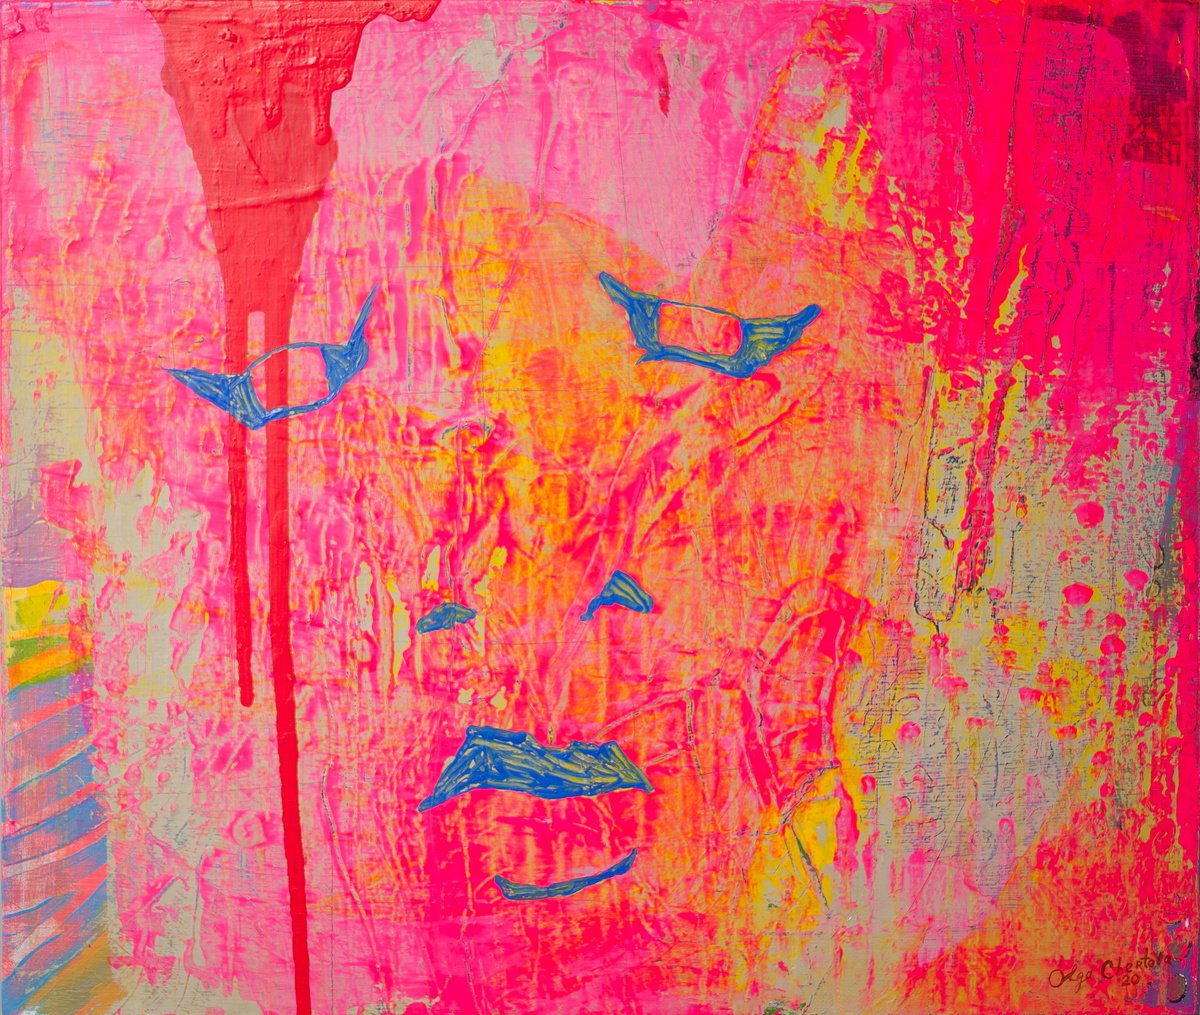 chilling pink face figurative portrait by Olga Chertova